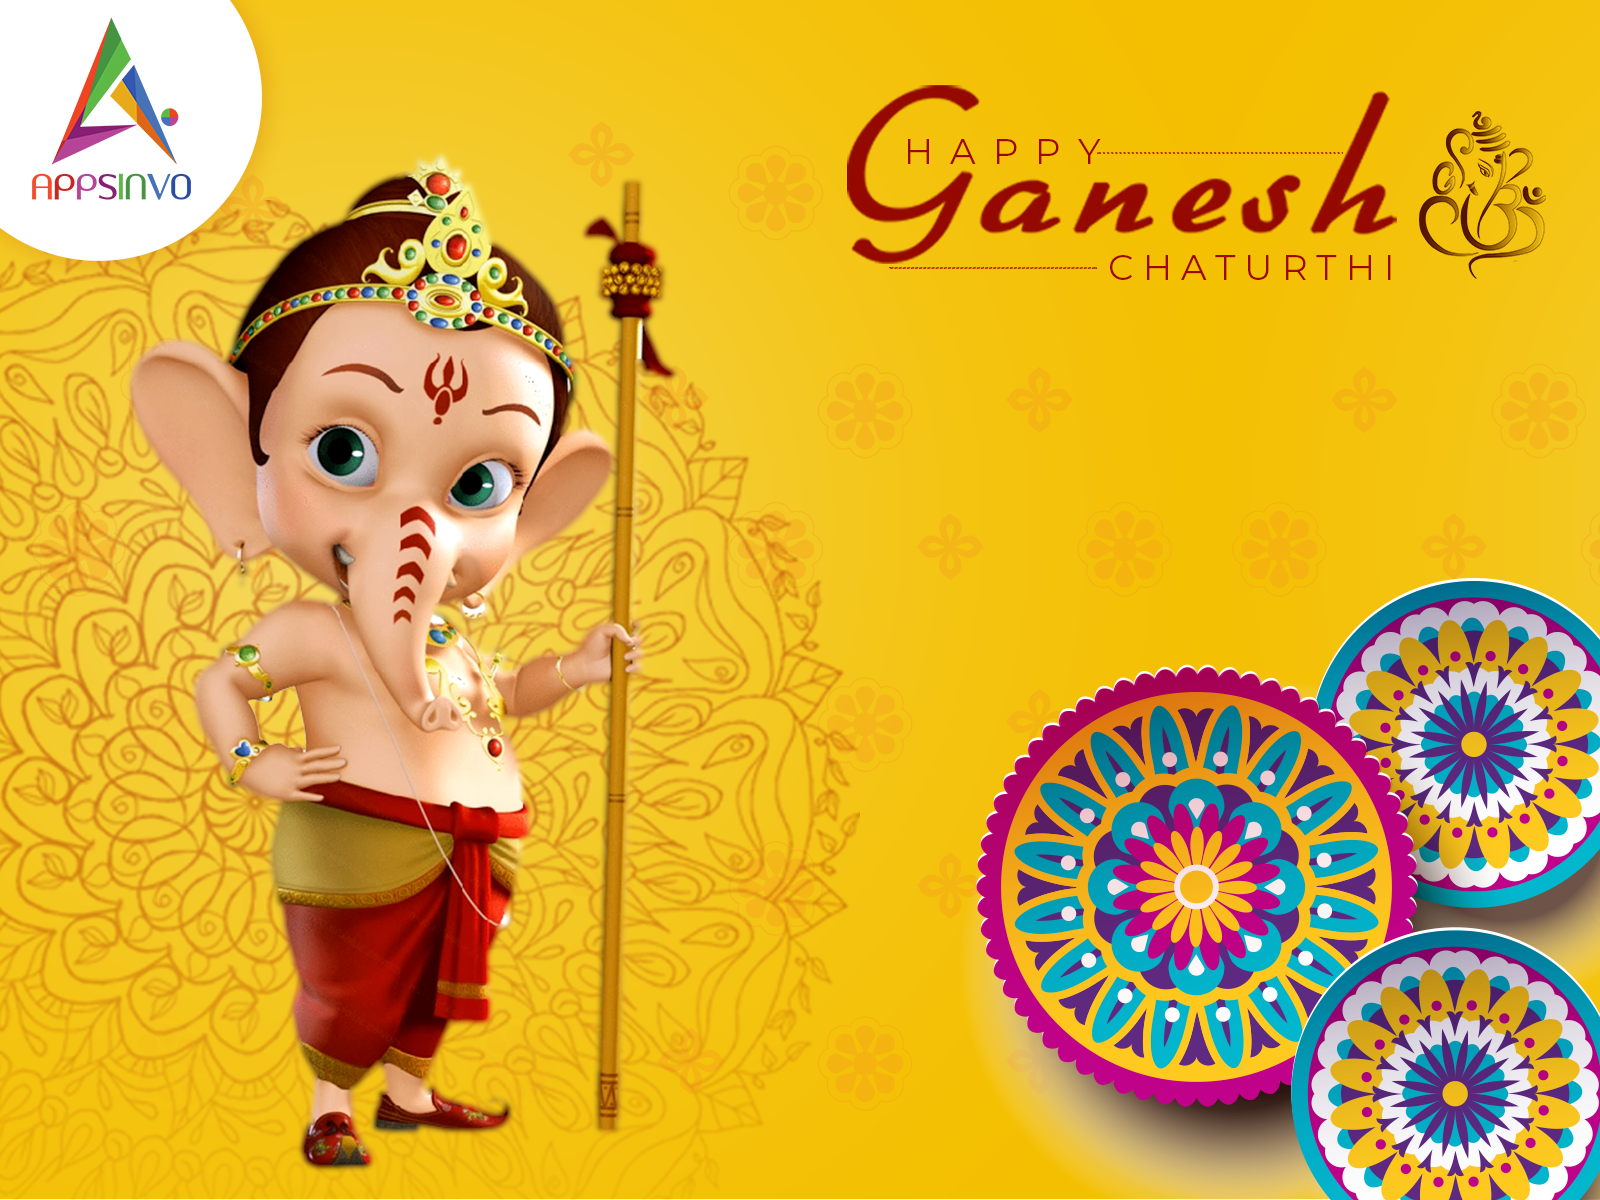 Happy Ganesh Chaturthi by Appsinvo on Dribbble